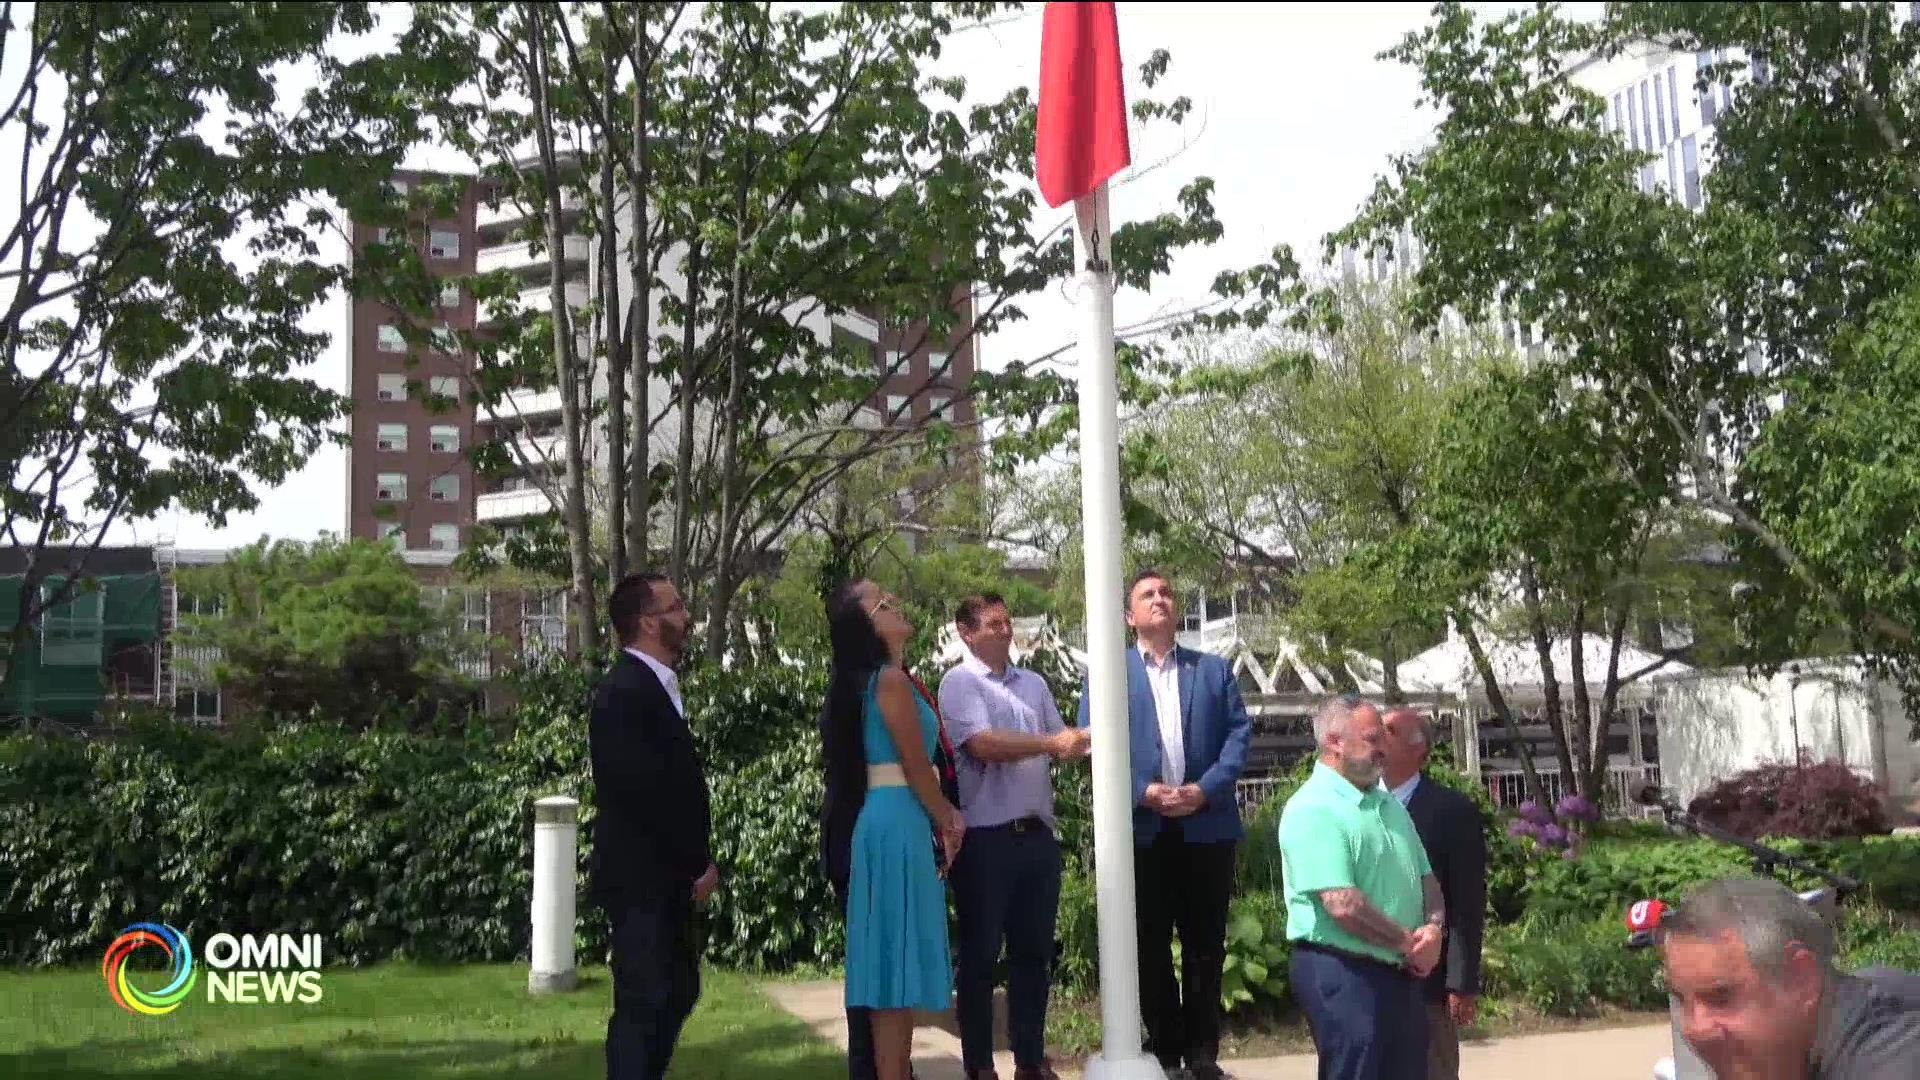 Portugal's flag raising ceremony in Brampton